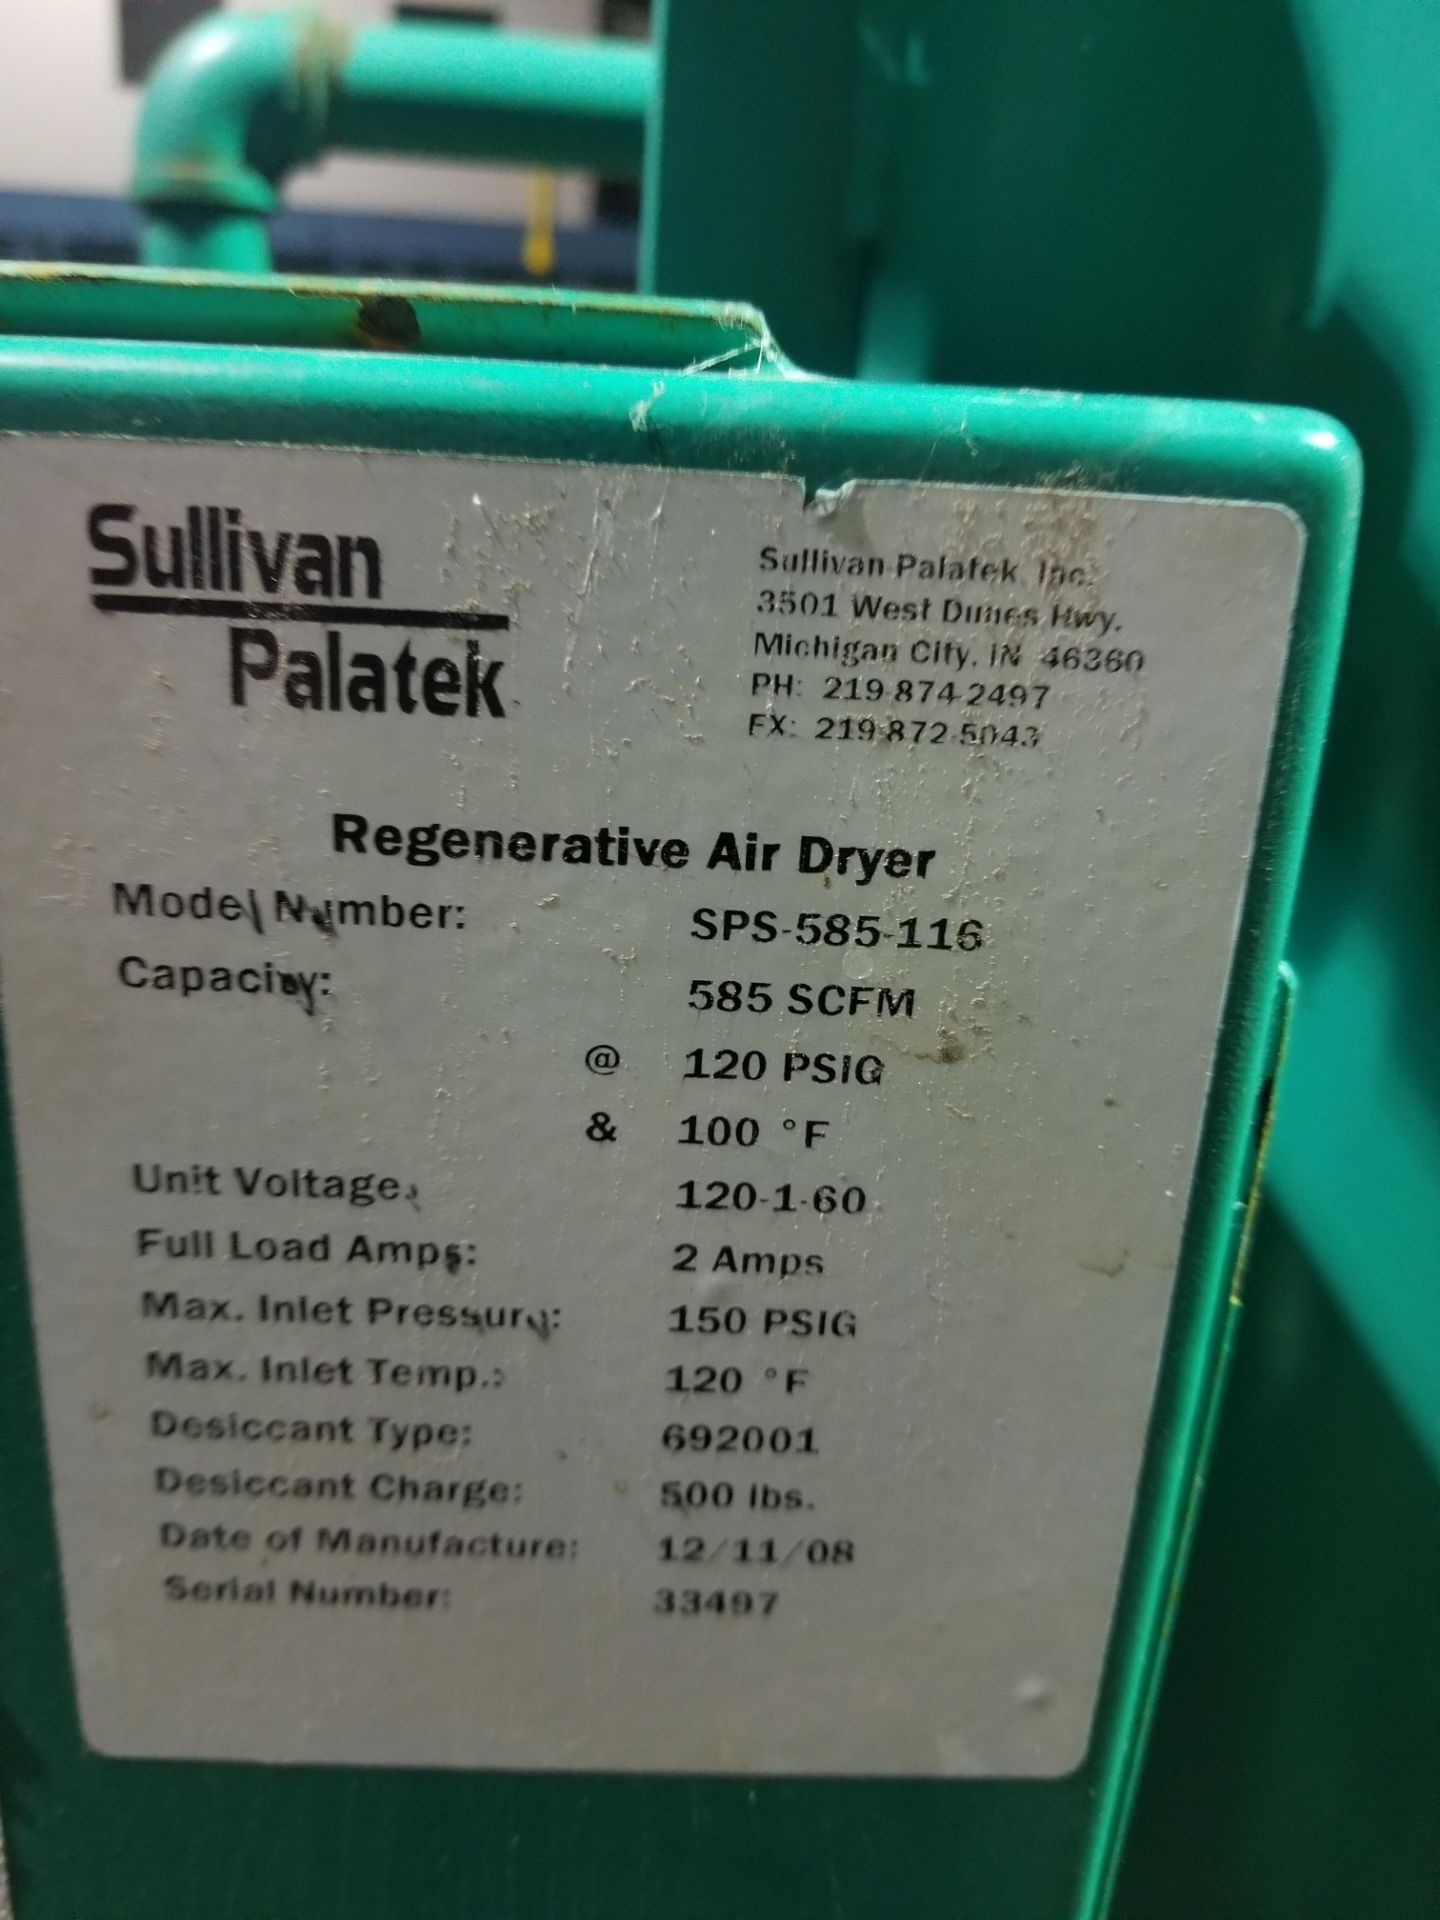 Sullivan Palatek 100UDGJ Rotary Screw Air Compressor with Air Dryer - Image 7 of 7